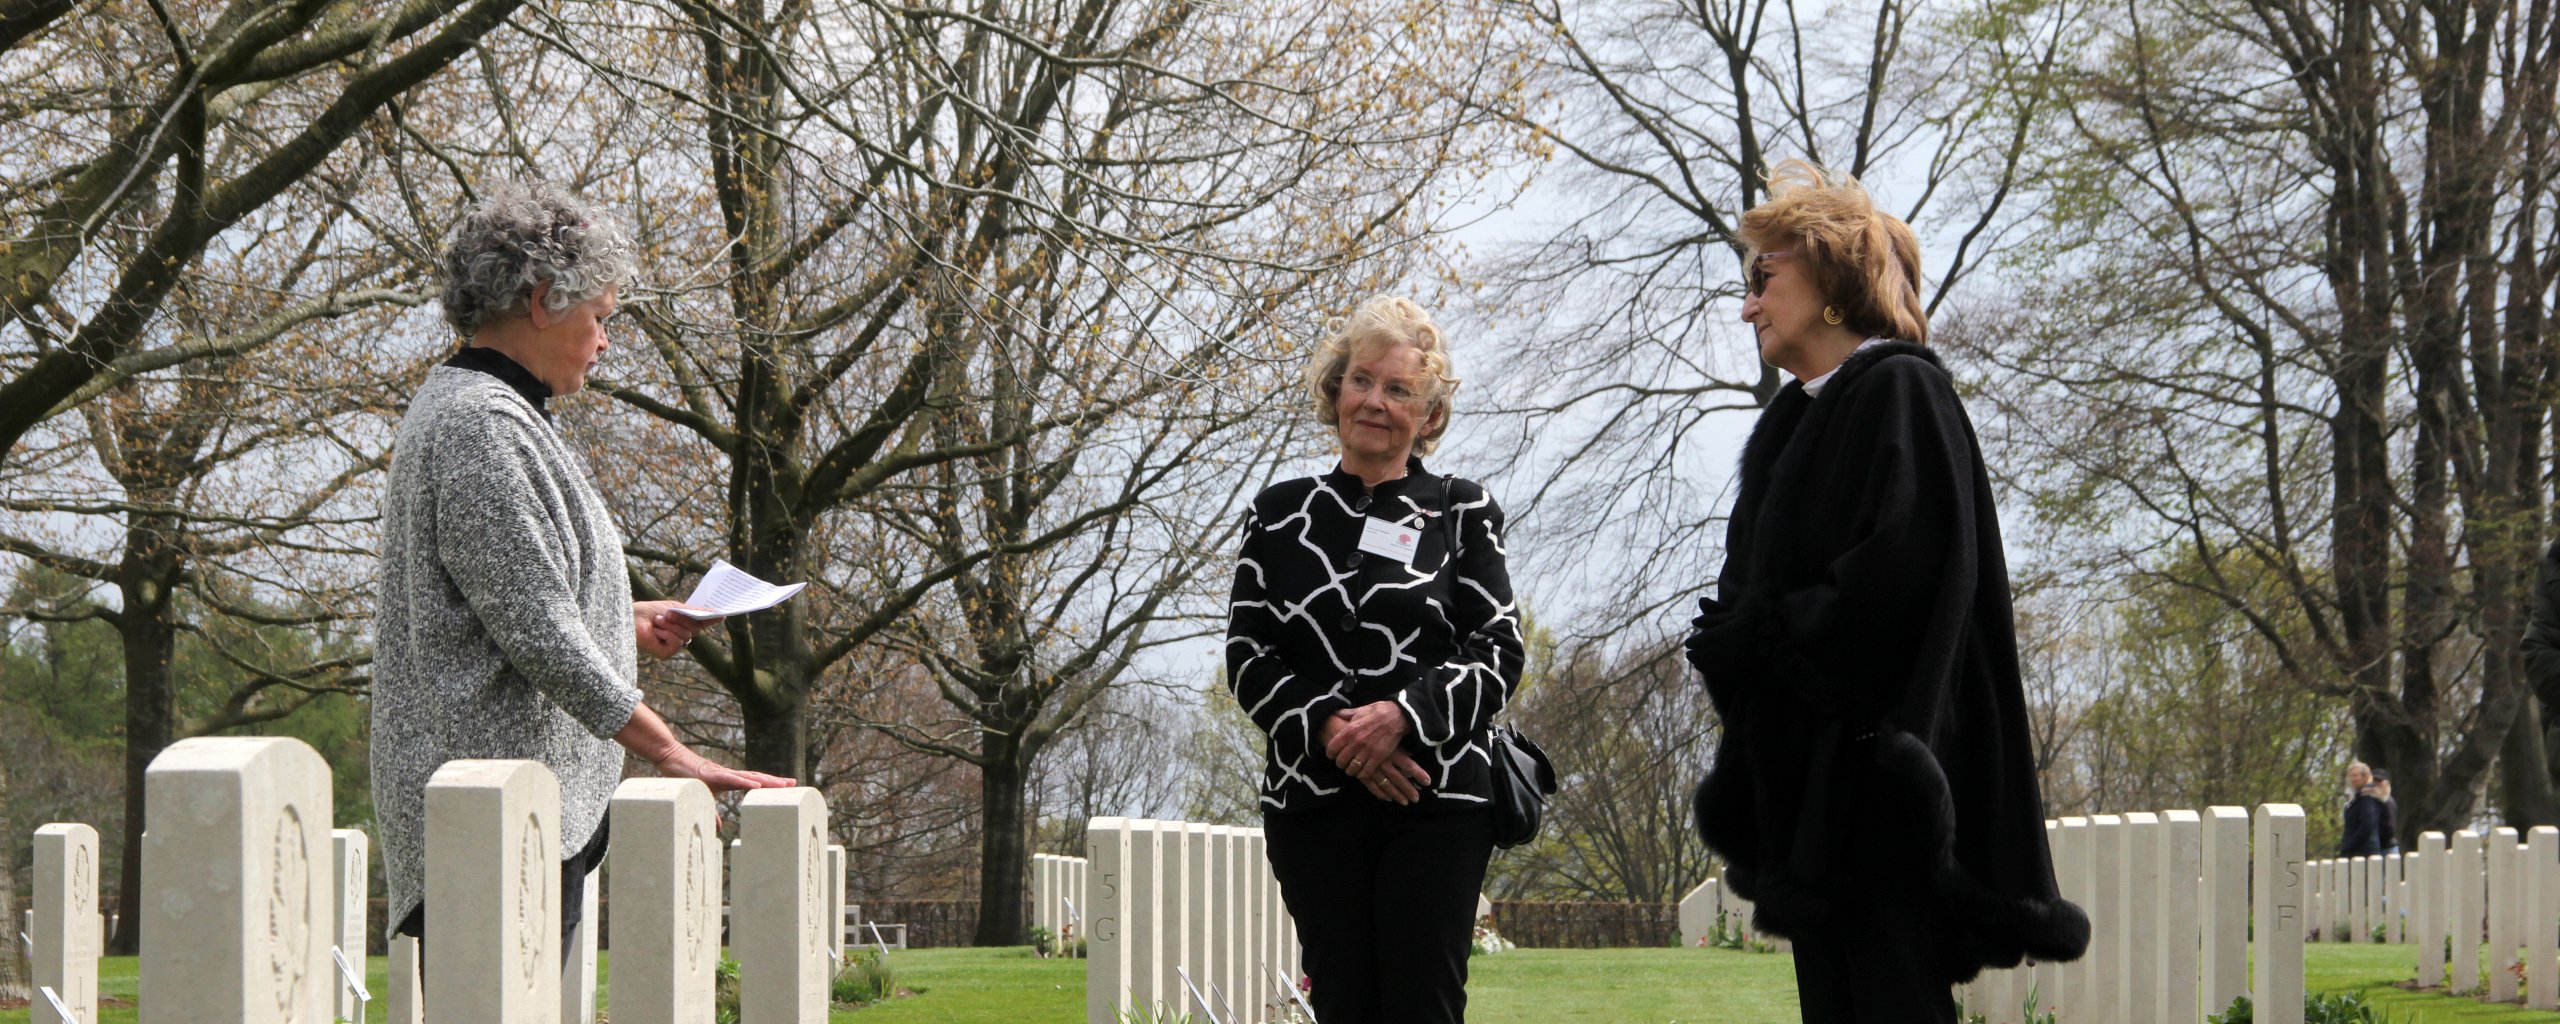 Prinses Margriet en voorzitter Faces to Graves bij monument